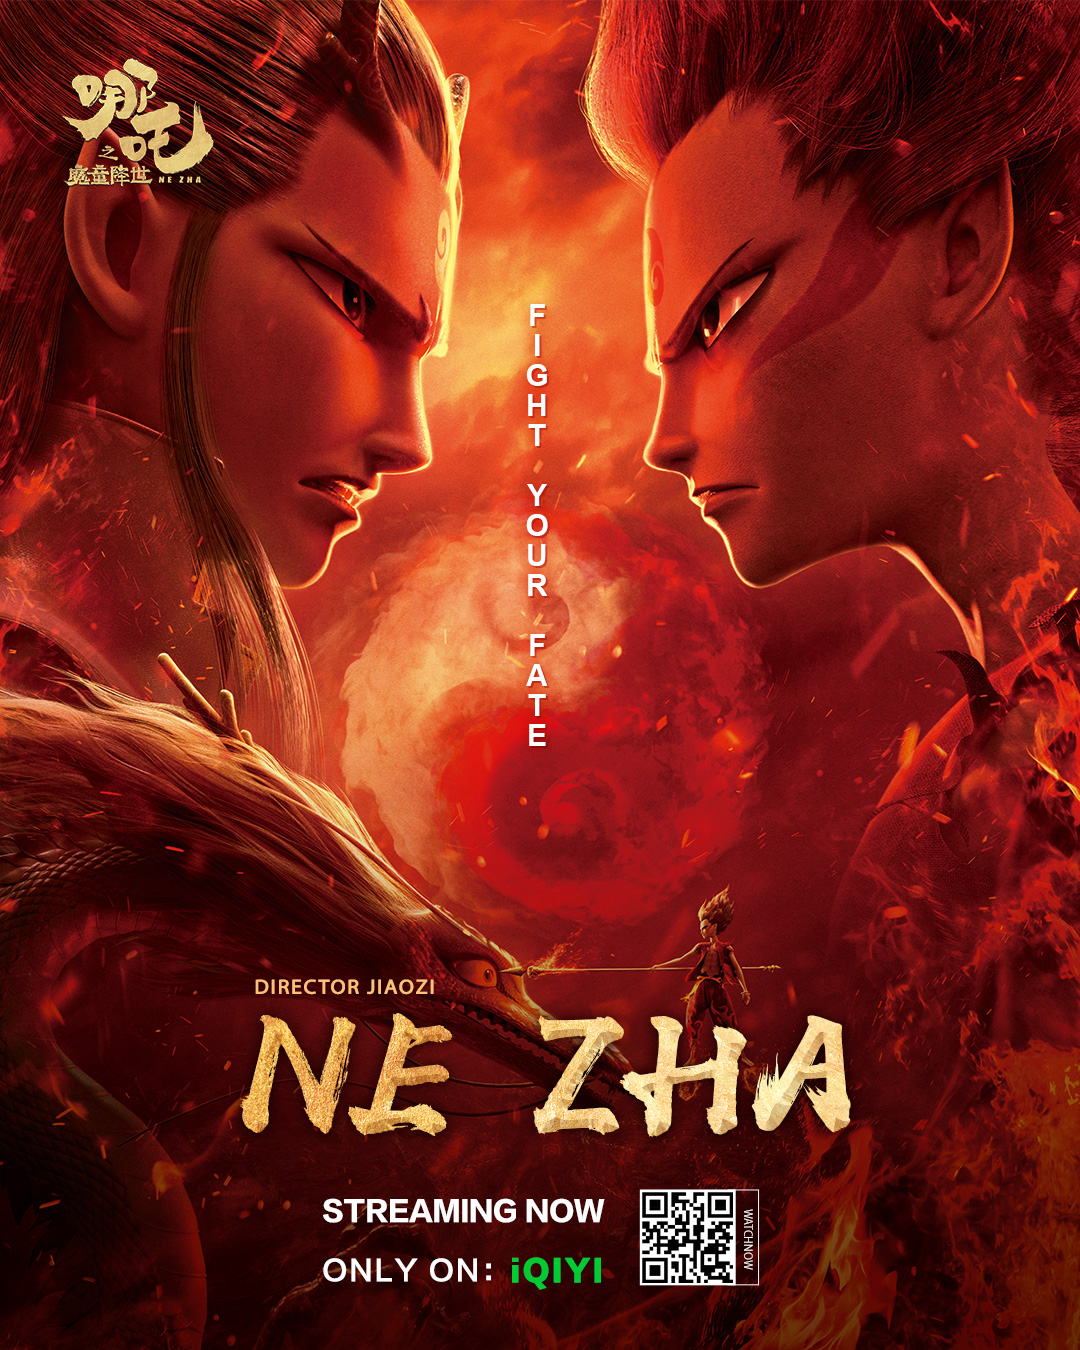 iQIYI ปล่อยภาพยนตร์แอนิเมชันดัง Nezha รับชมได้เฉพาะ 9 ประเทศในเอเชียตะวันออกเฉียงใต้